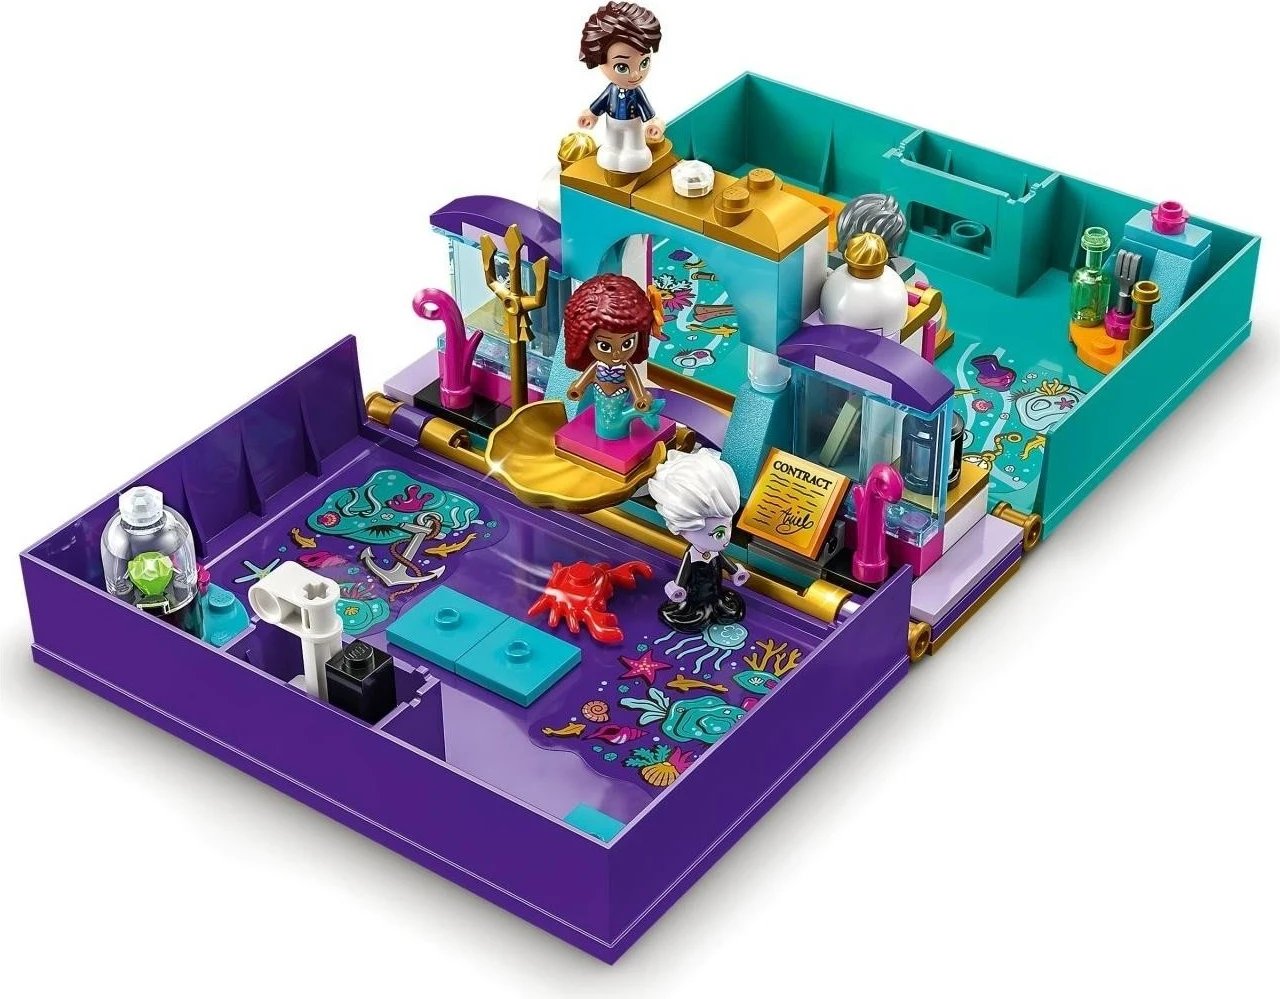 Set lodër Lego, Disney Princess 43213, 35 copë